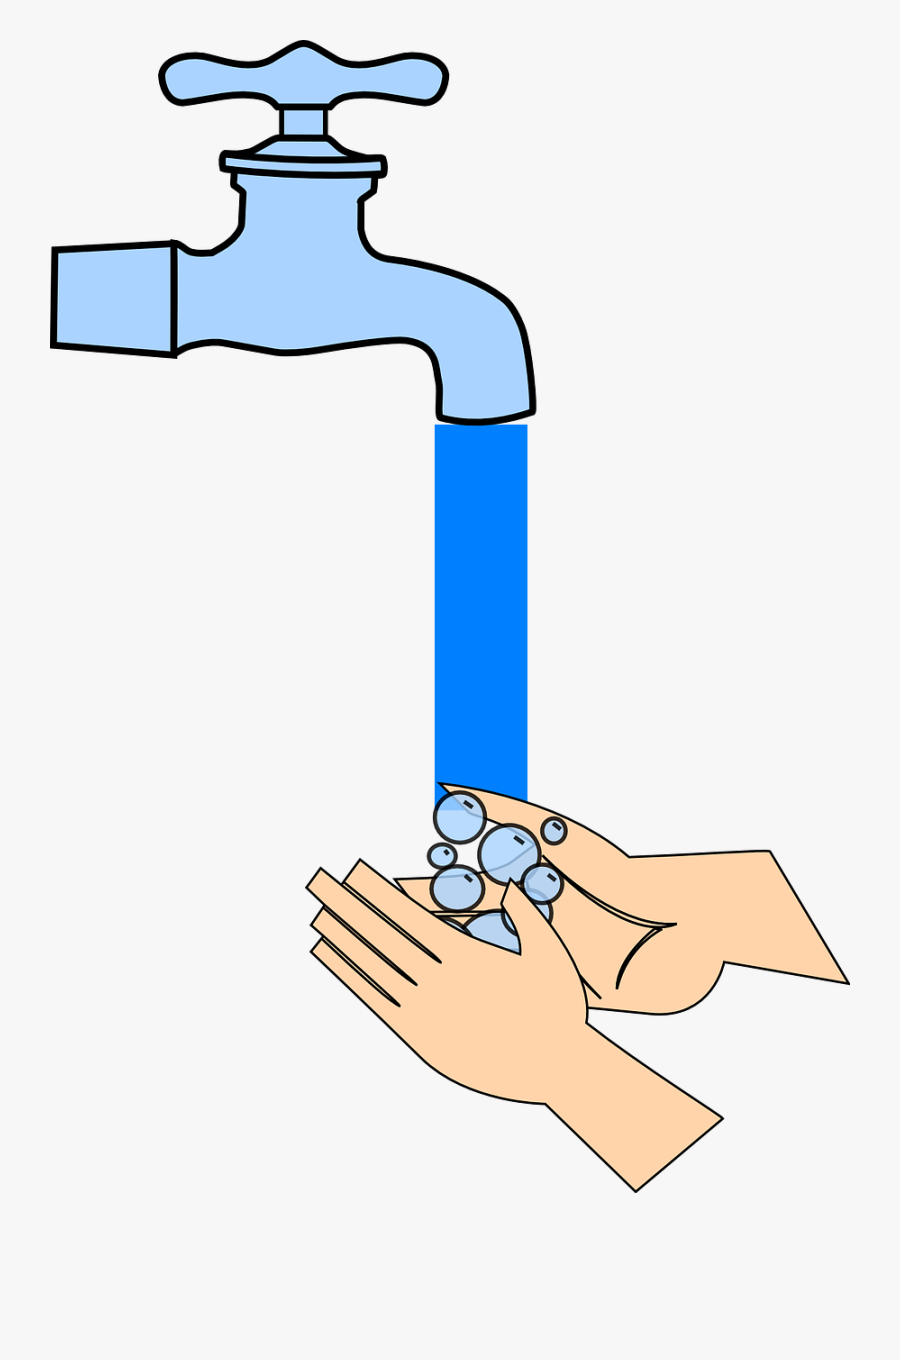 Washing Clipart Hand Animation - Washing Hand Cartoon Gif, Transparent Clipart